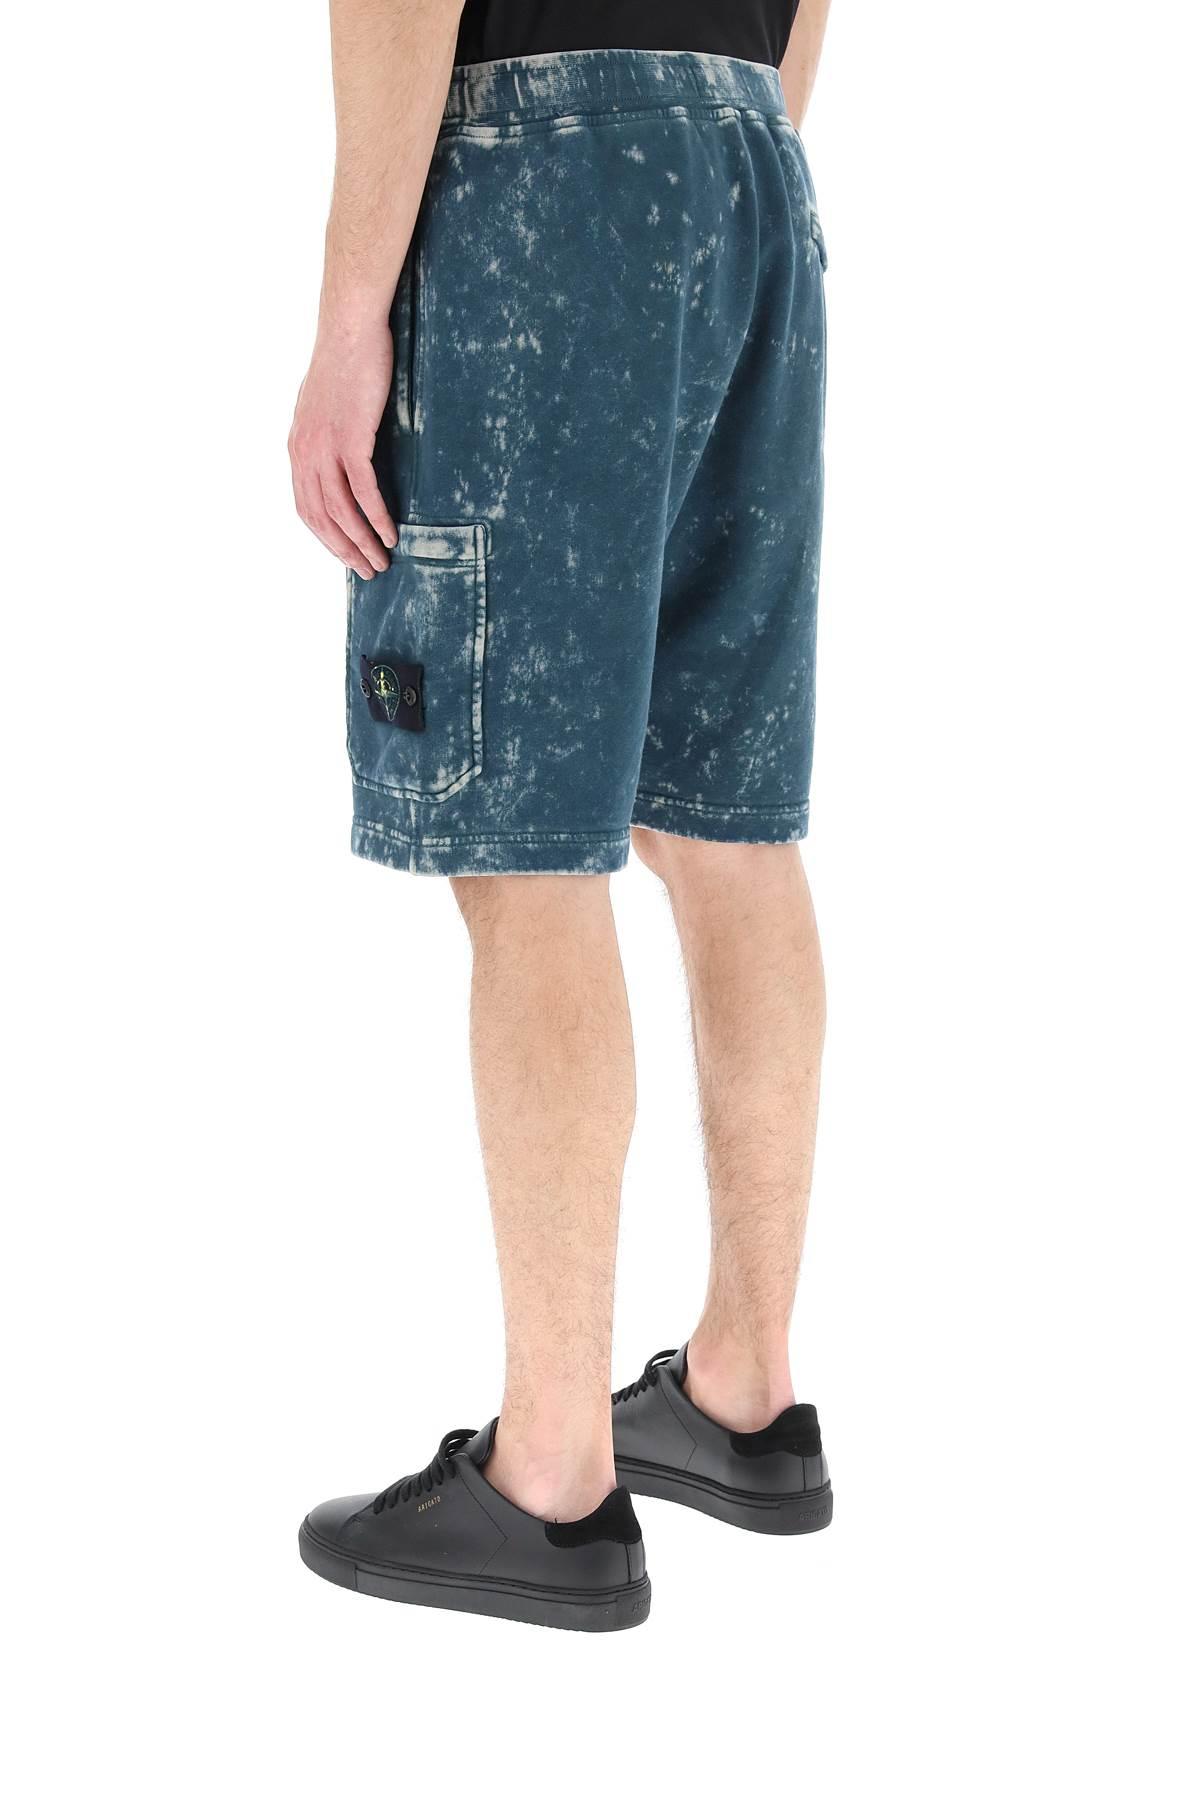 Stone Island Off-dye Ovd Cotton Fleece Shorts in Blue for Men | Lyst